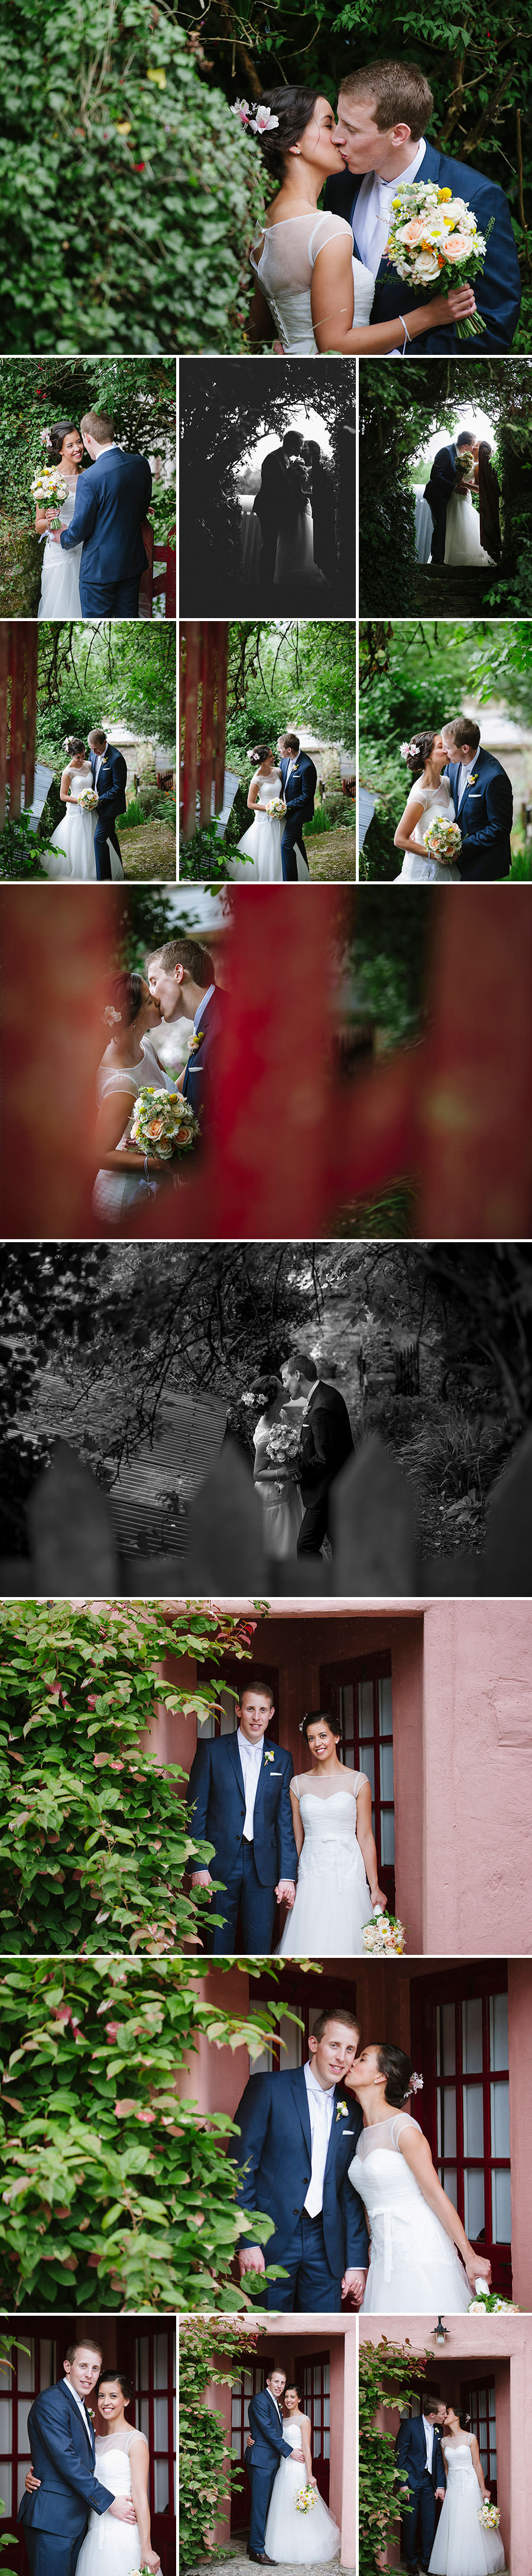 P + R | Barnabrow Country House Wedding | Irish - Australian Wedding | Cork Wedding Photography 49